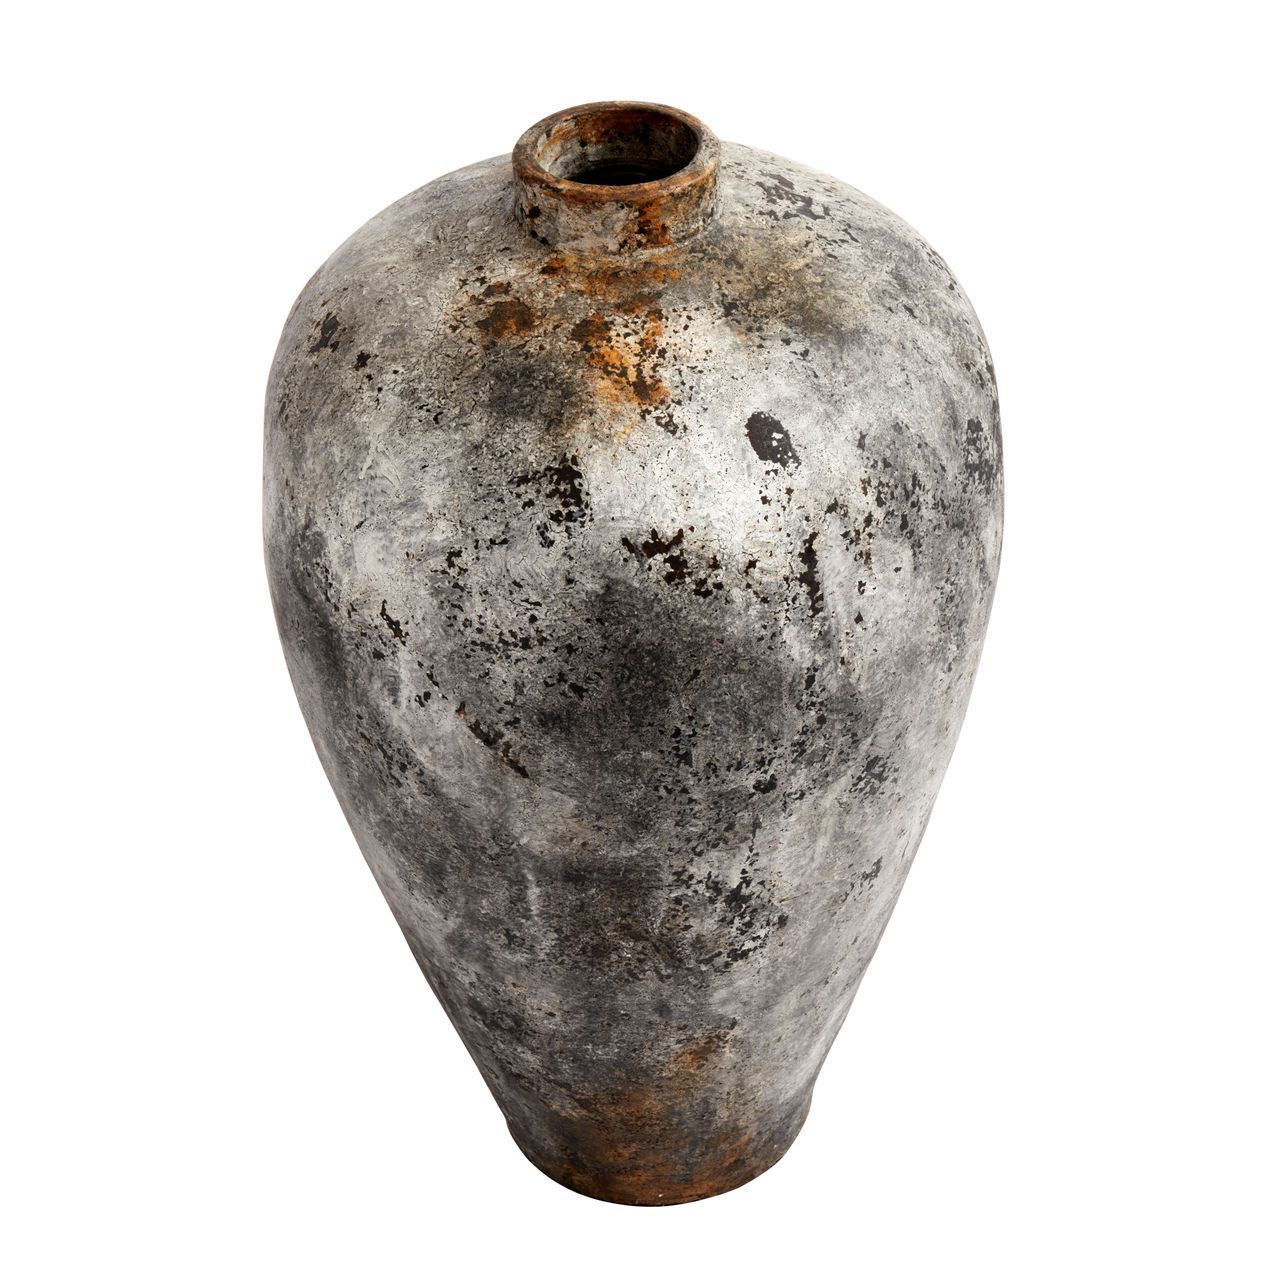 Muubs echo váza teracotta, 80 cm